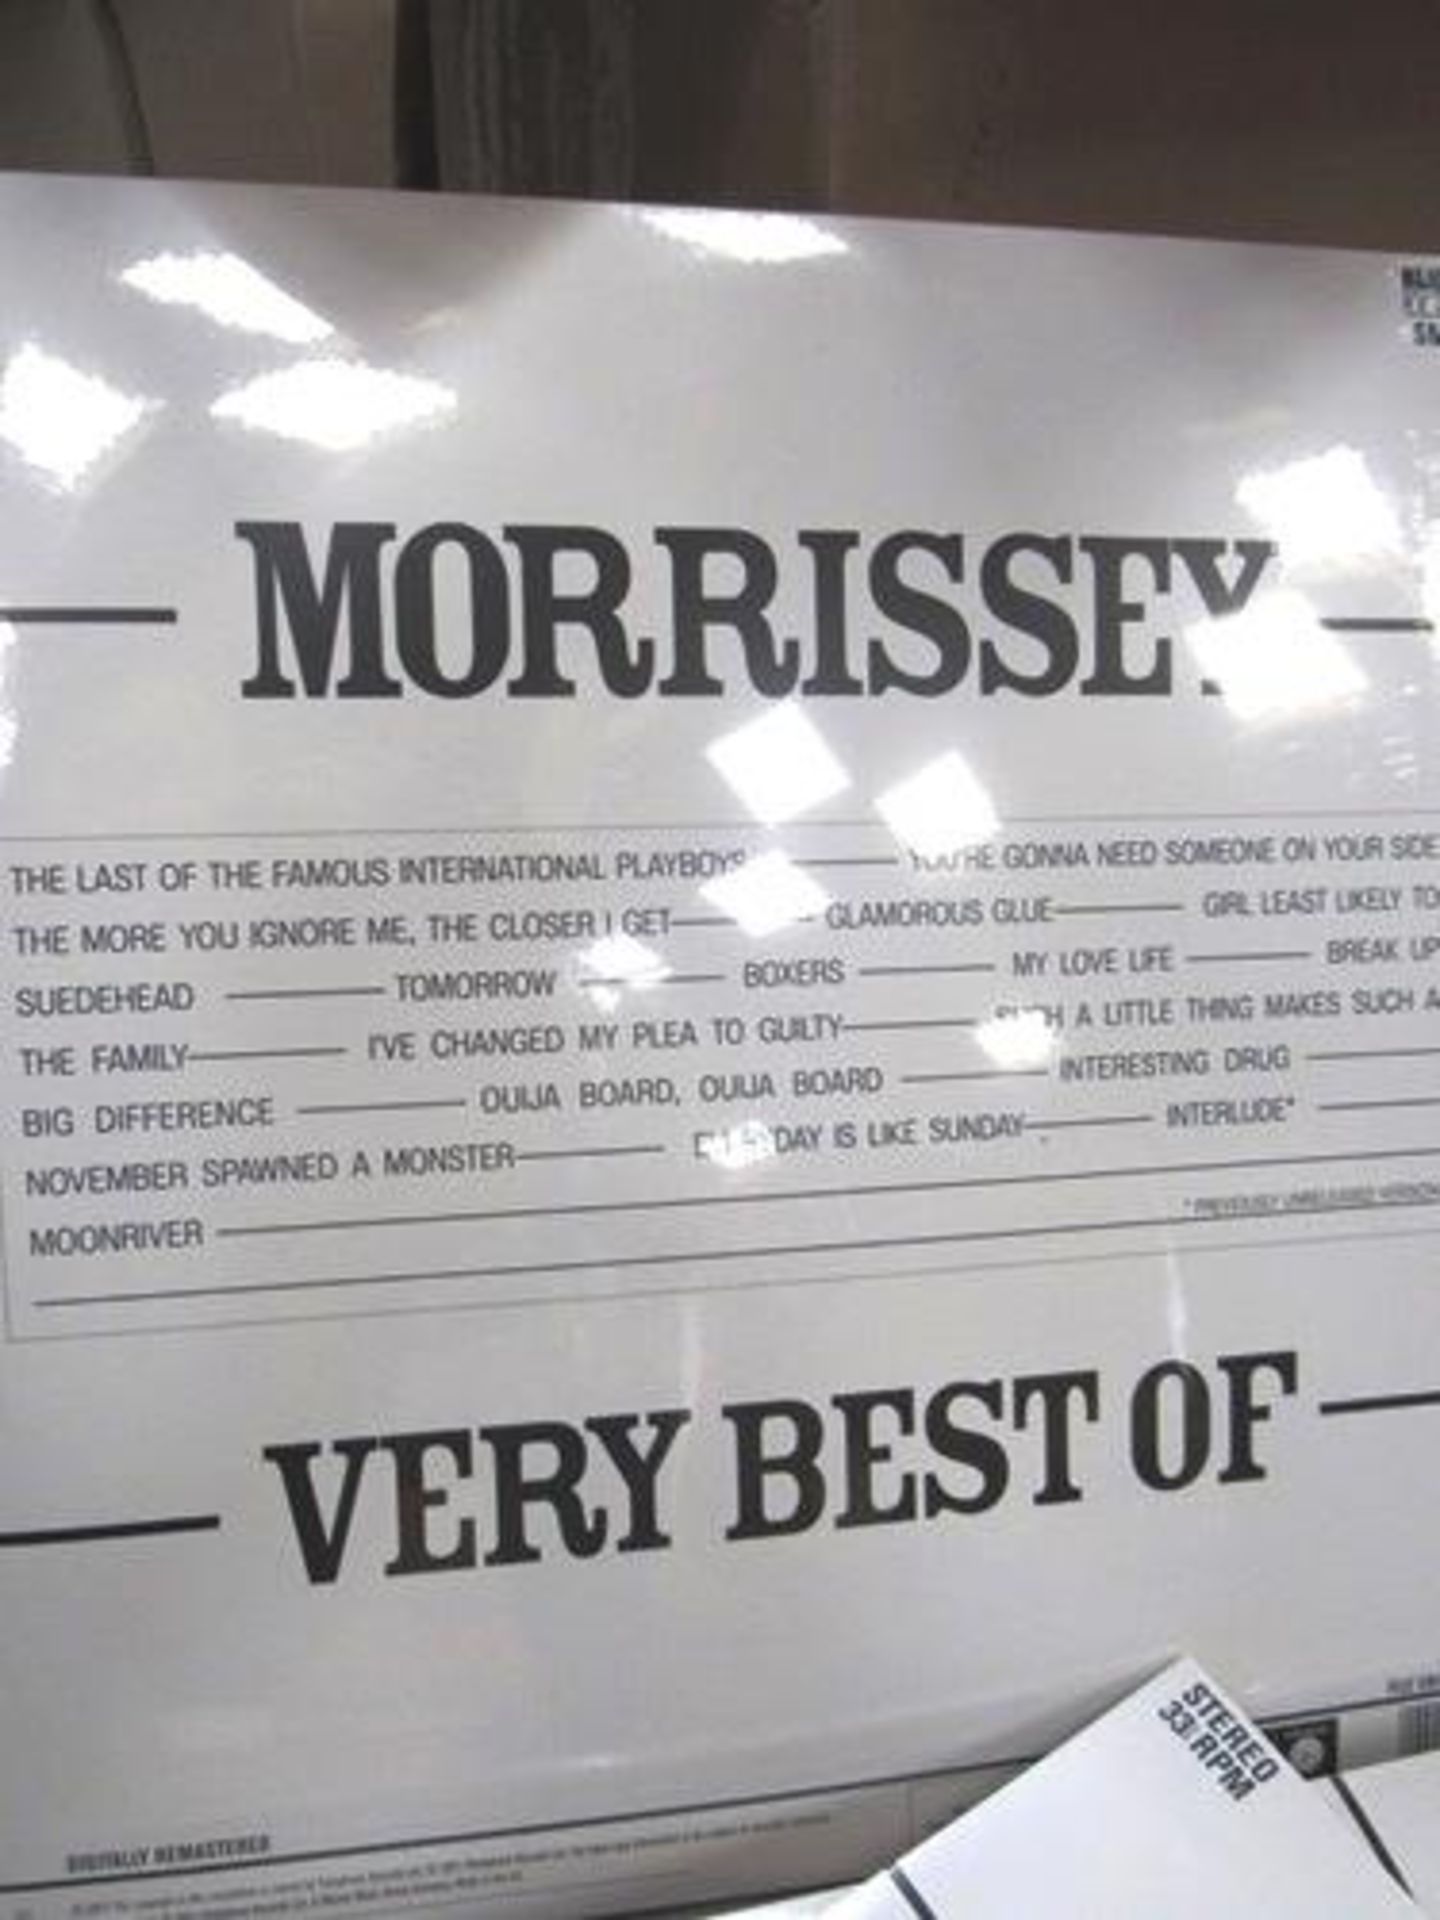 8 x The Very Best of Morrissey vinyl's - New (vinyl table) - Image 2 of 2